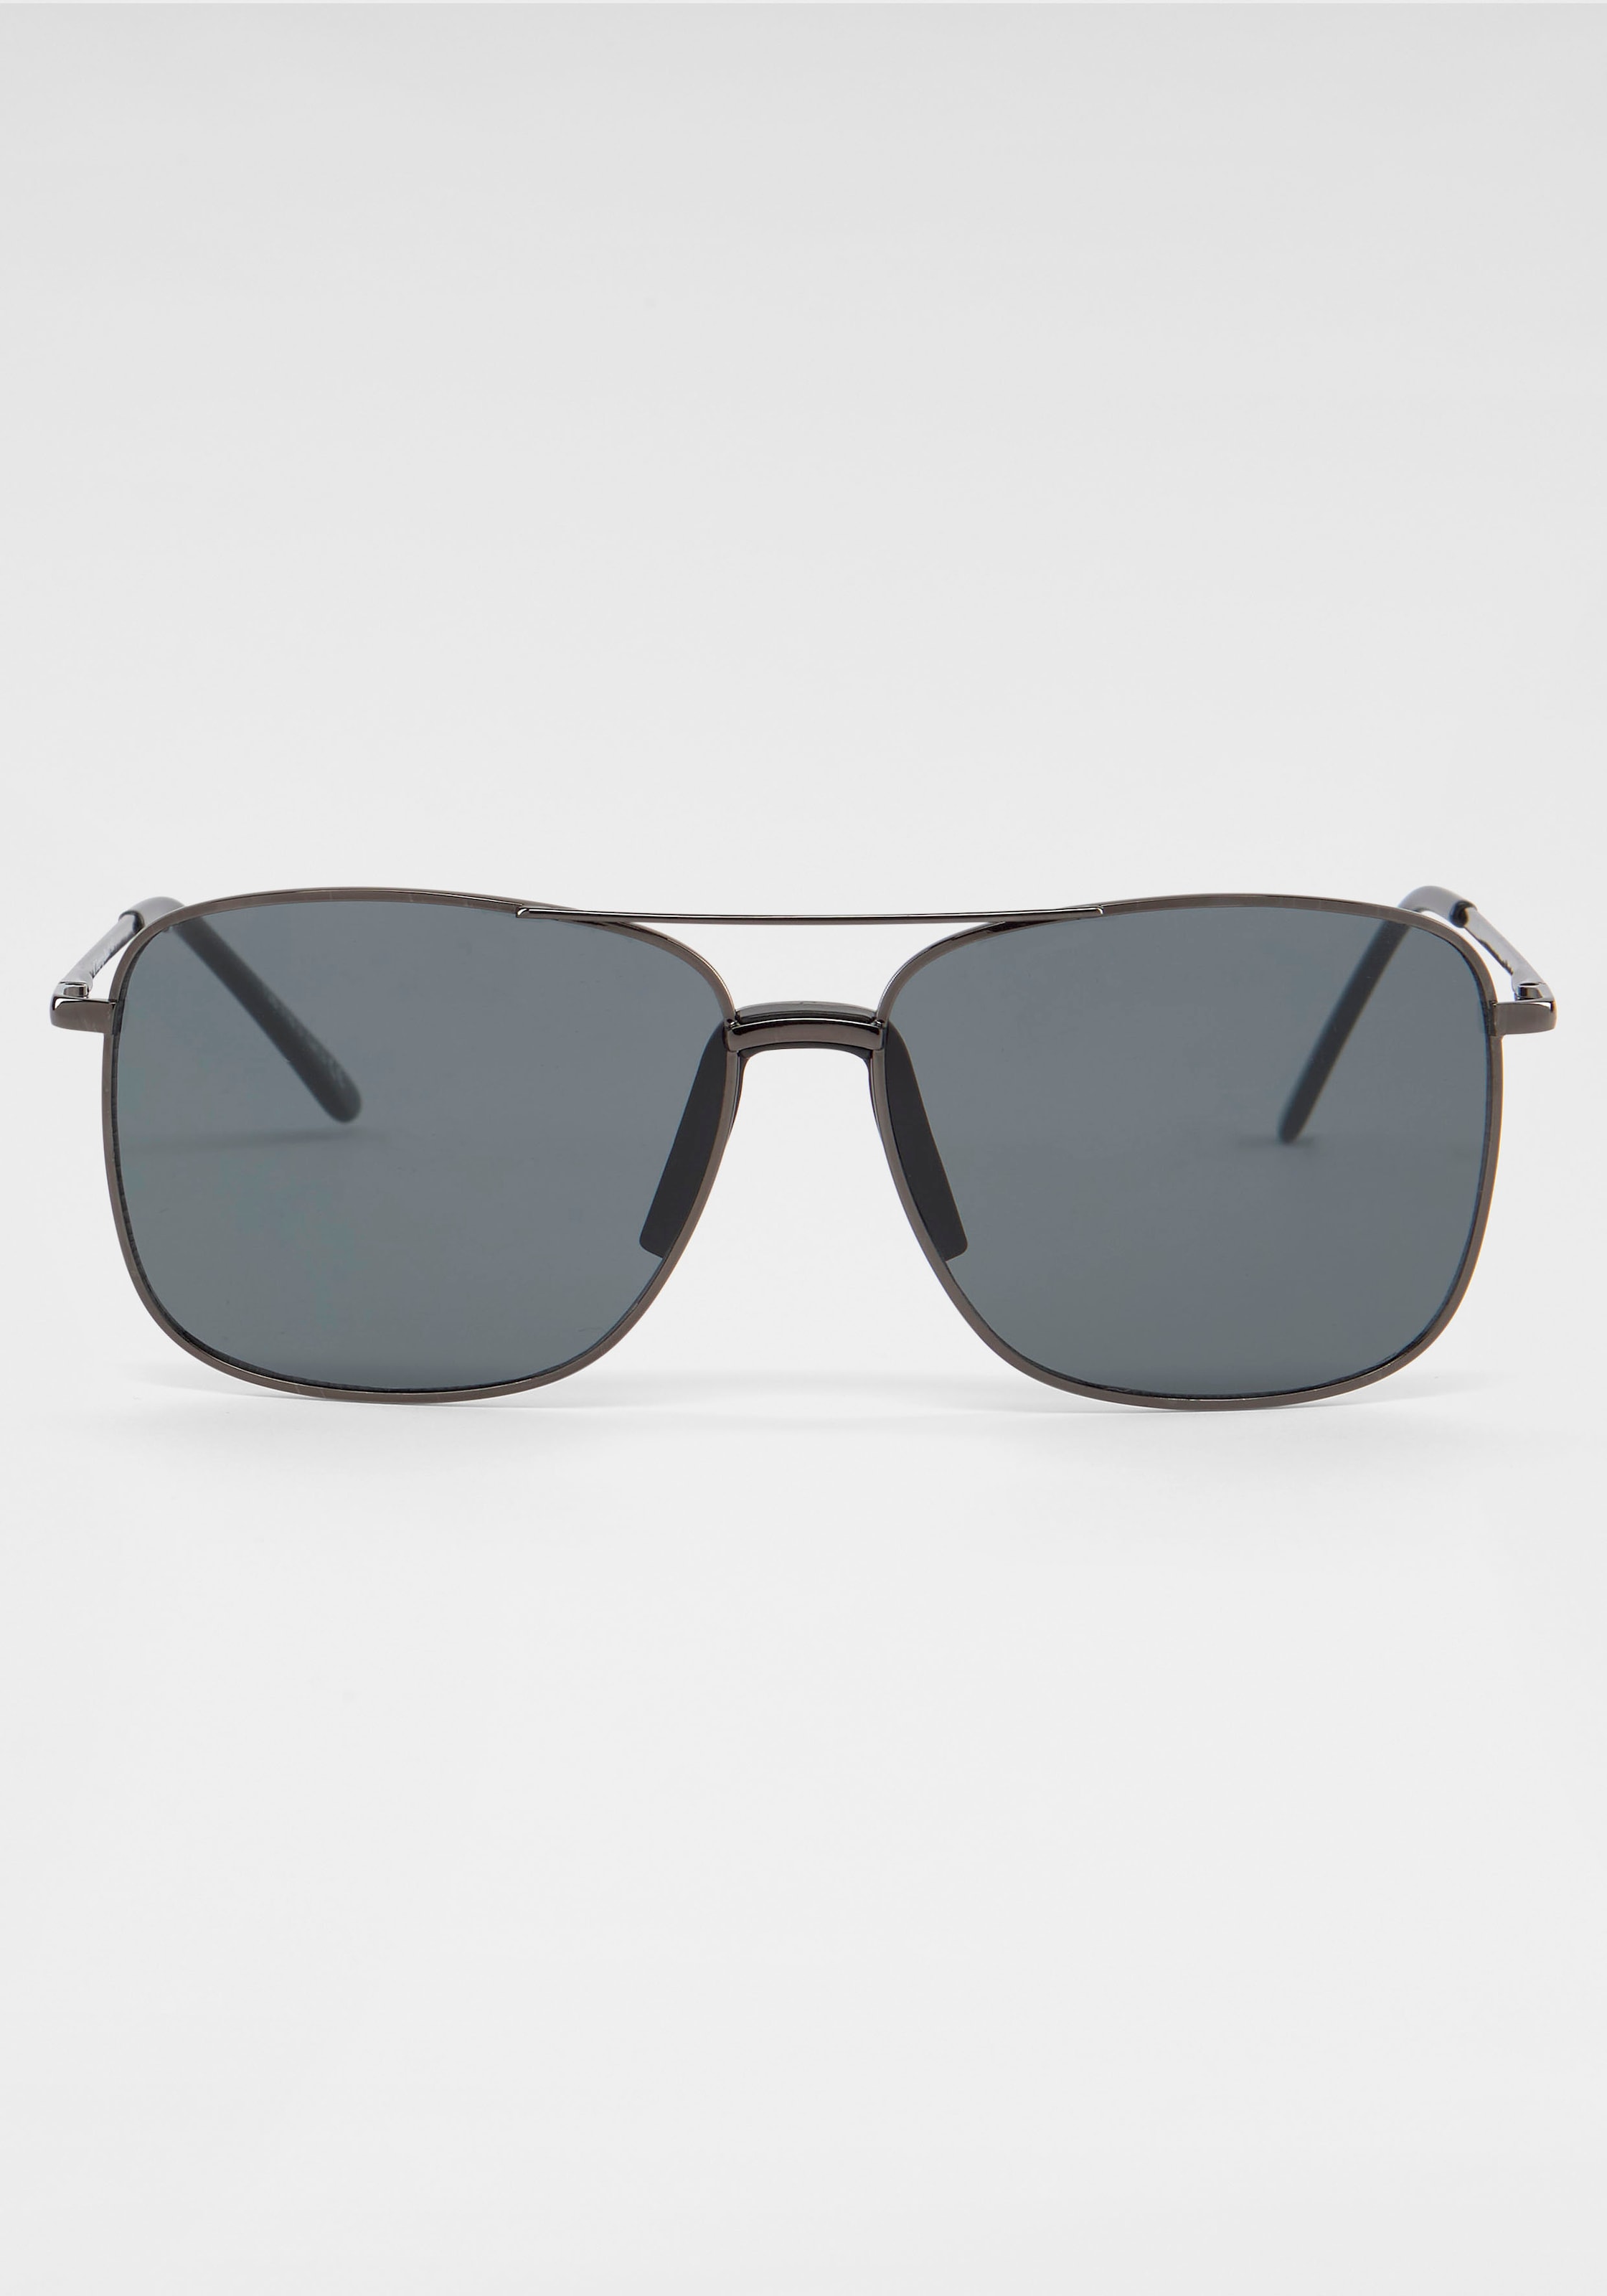 Sonnenbrille Feel kaufen | the 66 ROUTE BAUR Eyewear Freedom